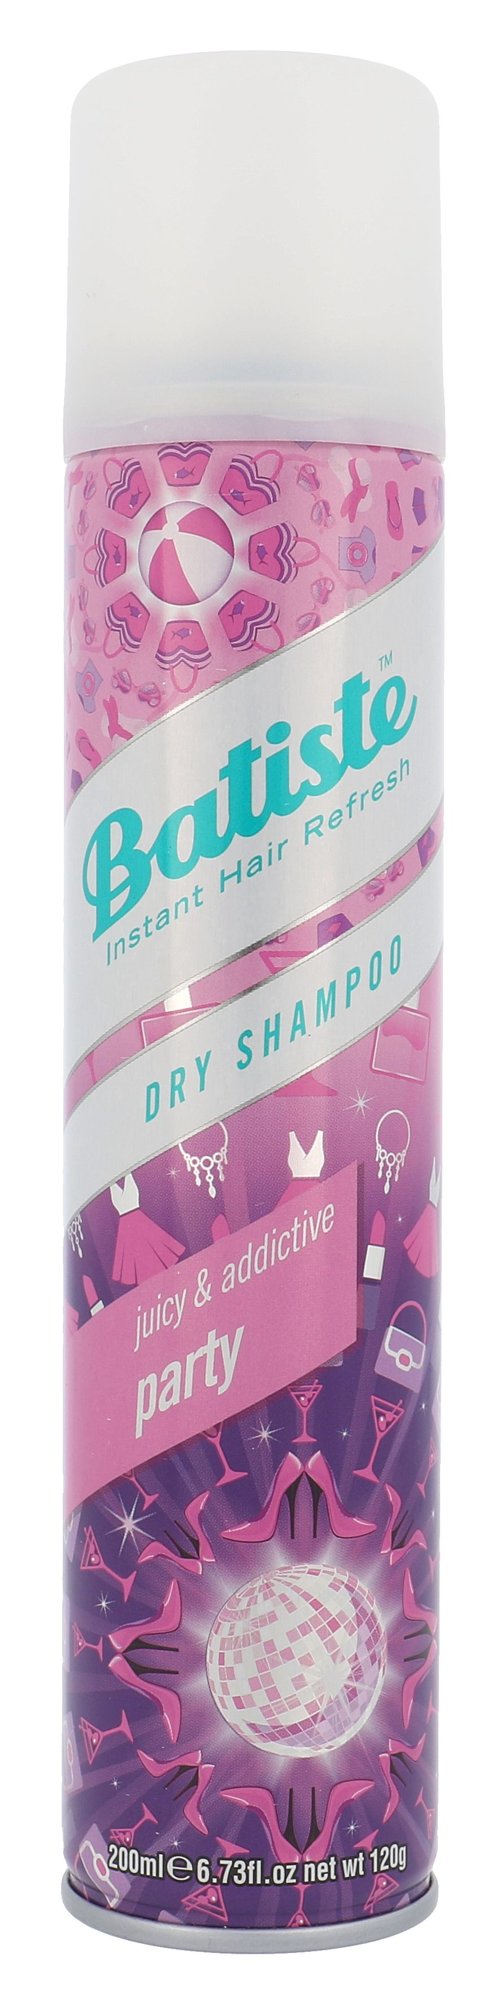 Batiste Dry Shampoo Party